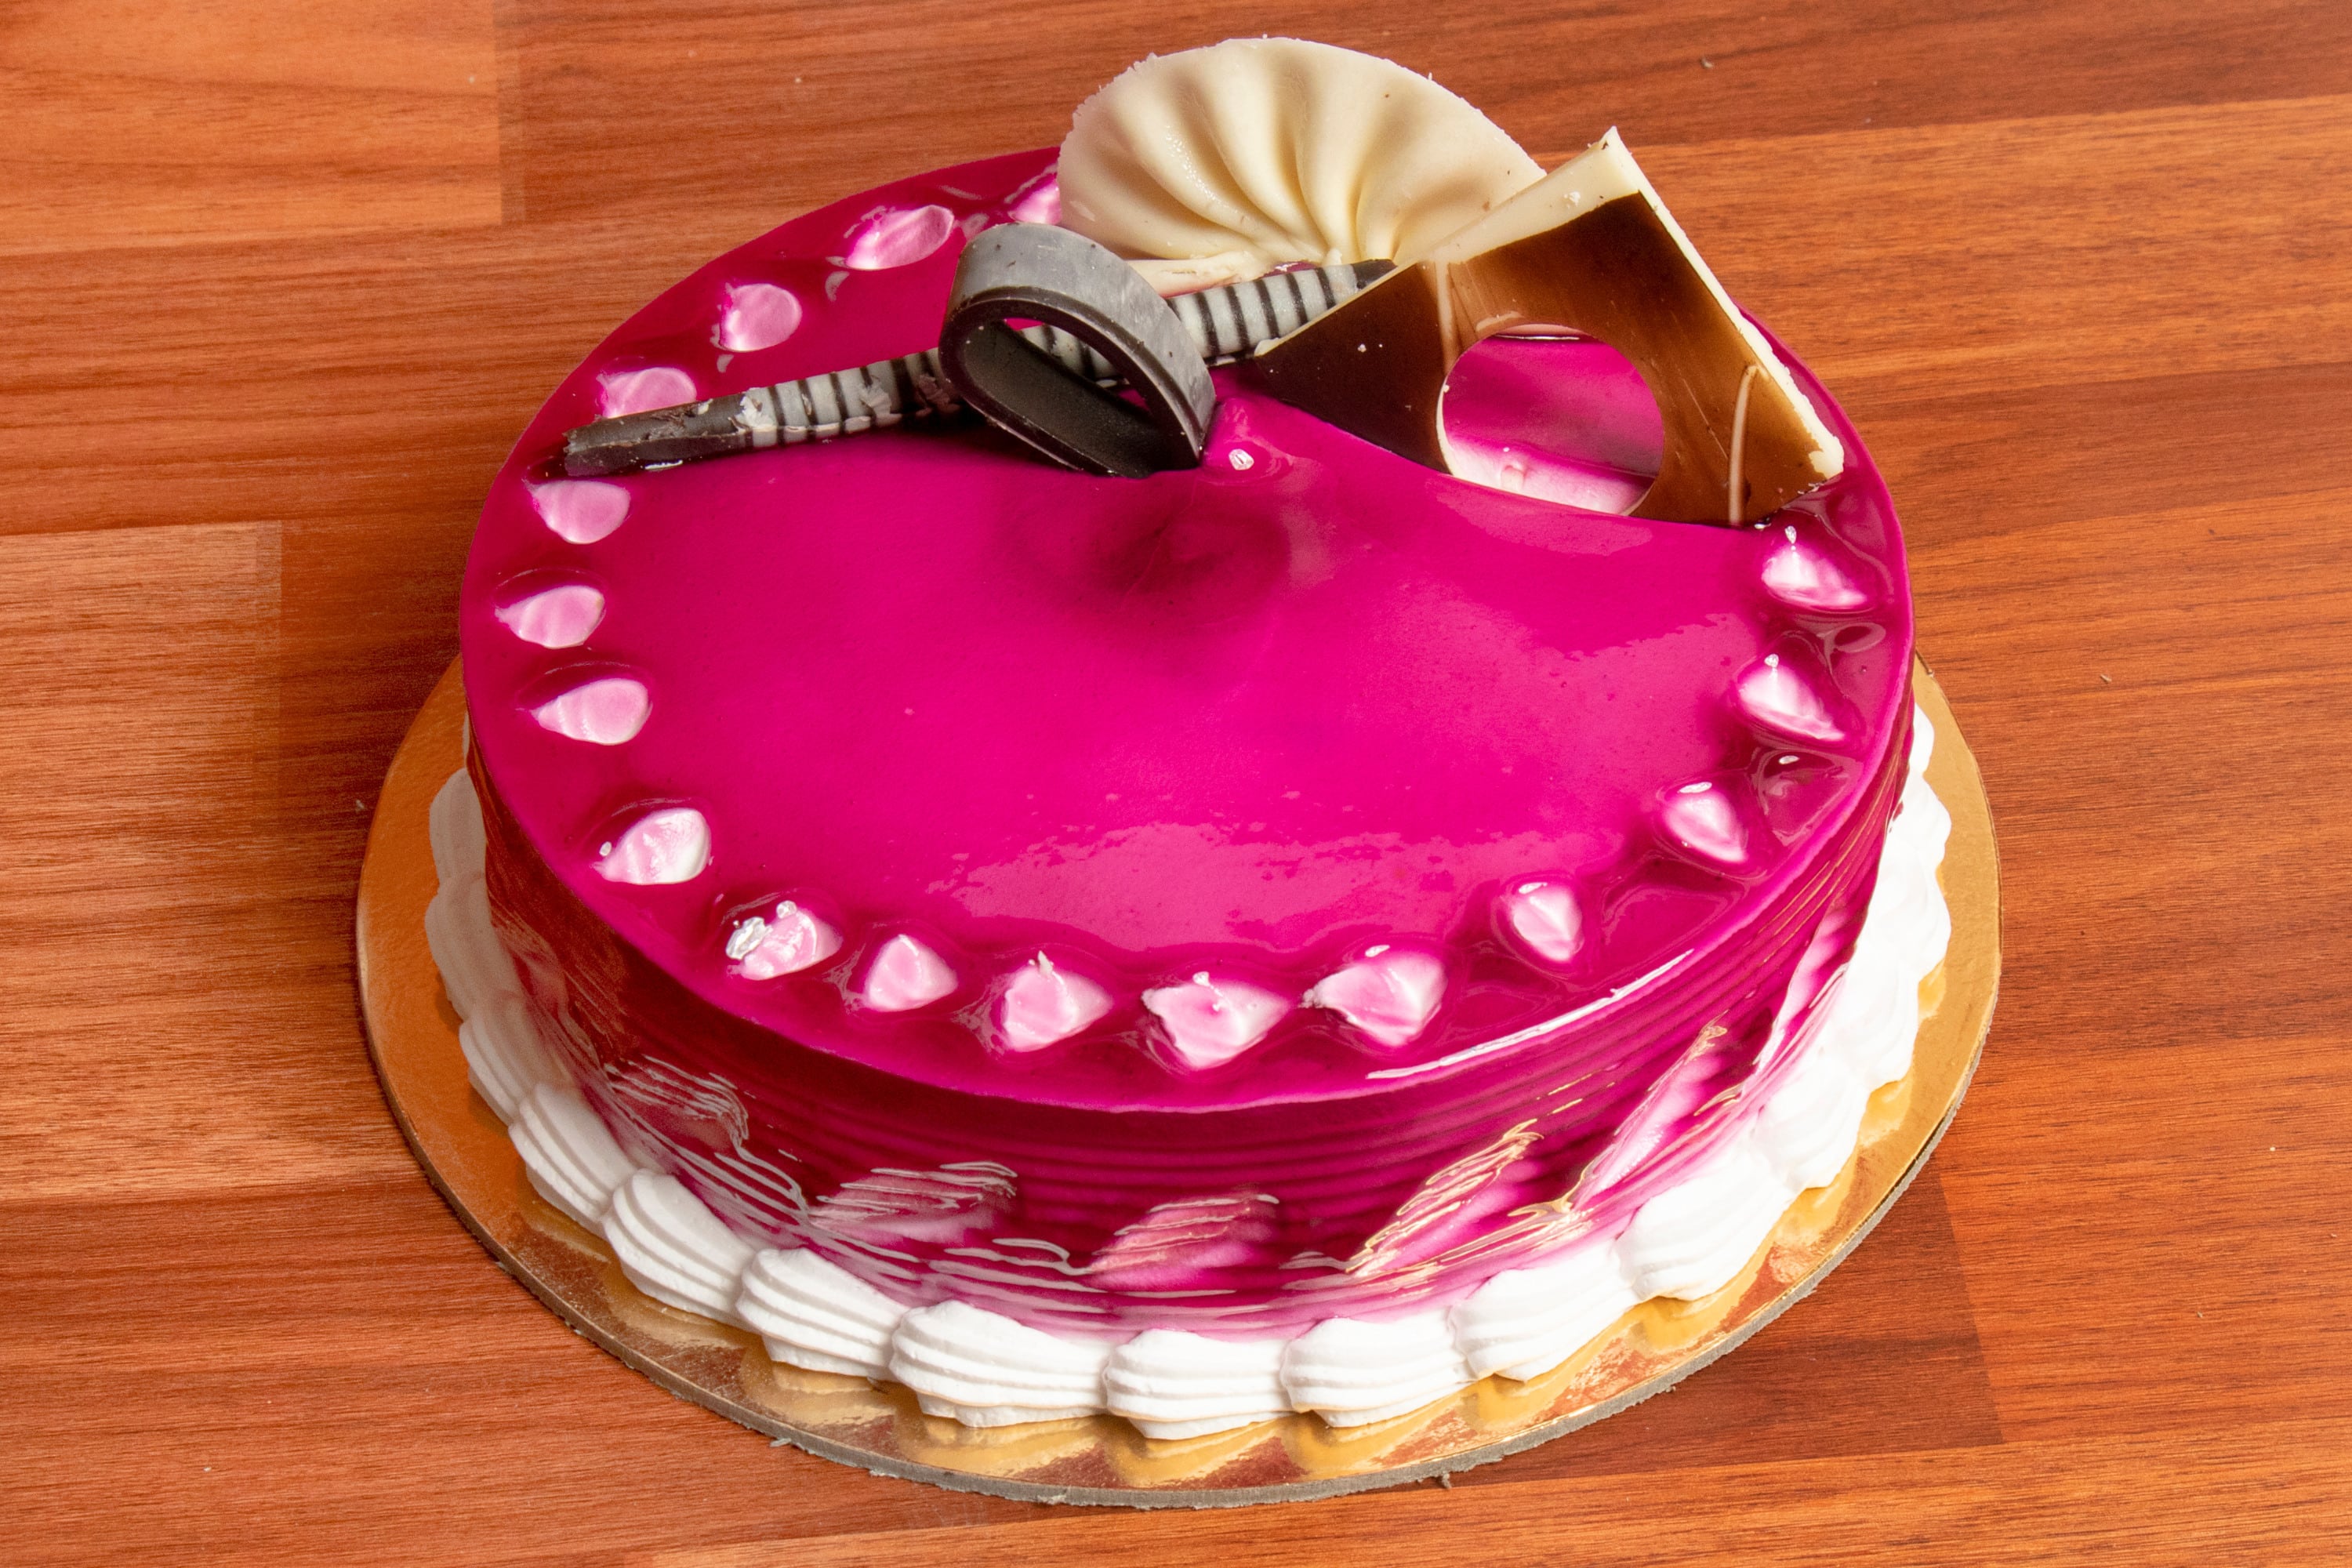 Himmelstorte (Heaven Cake) - Best Meringue Cake! - YouTube